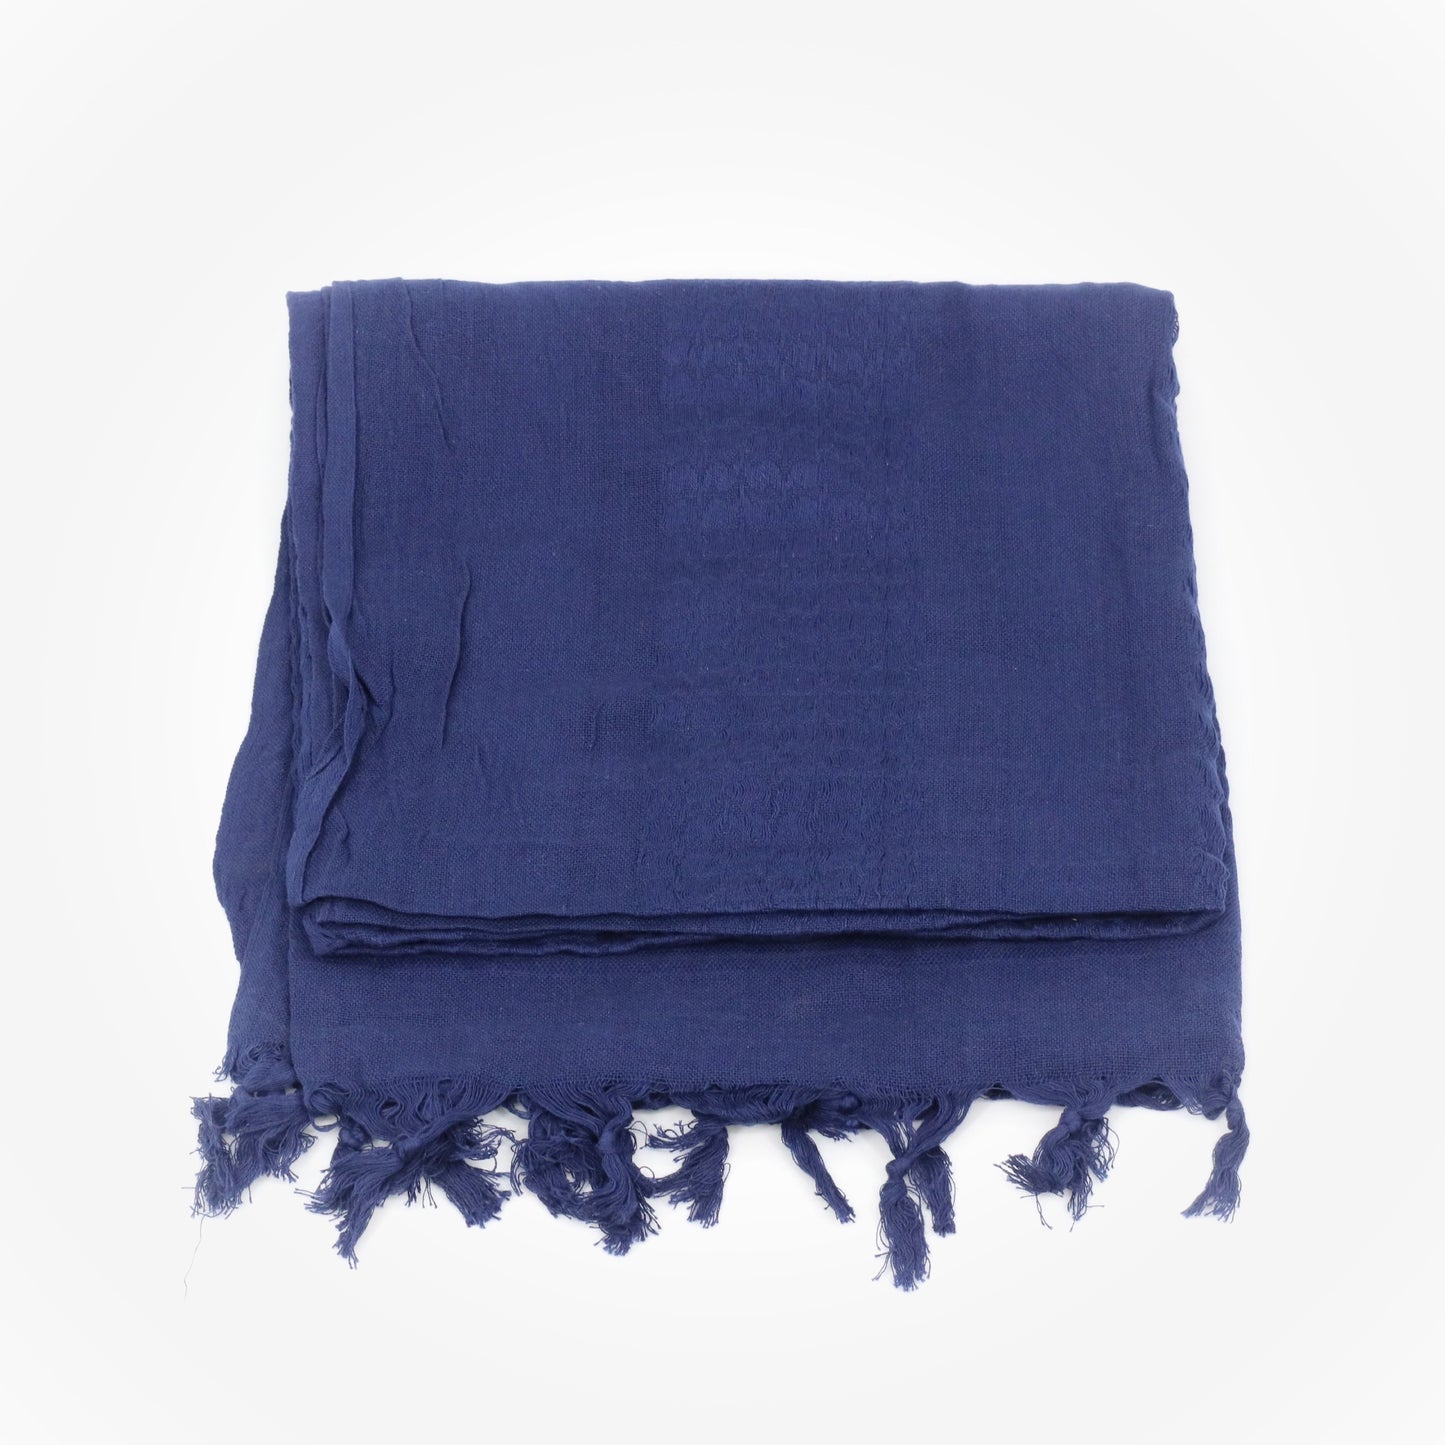 純深藍色輕巧沙漠圍巾/中東巾 Solid Lightweight Shemagh Desert Scarf (Navy Blue)